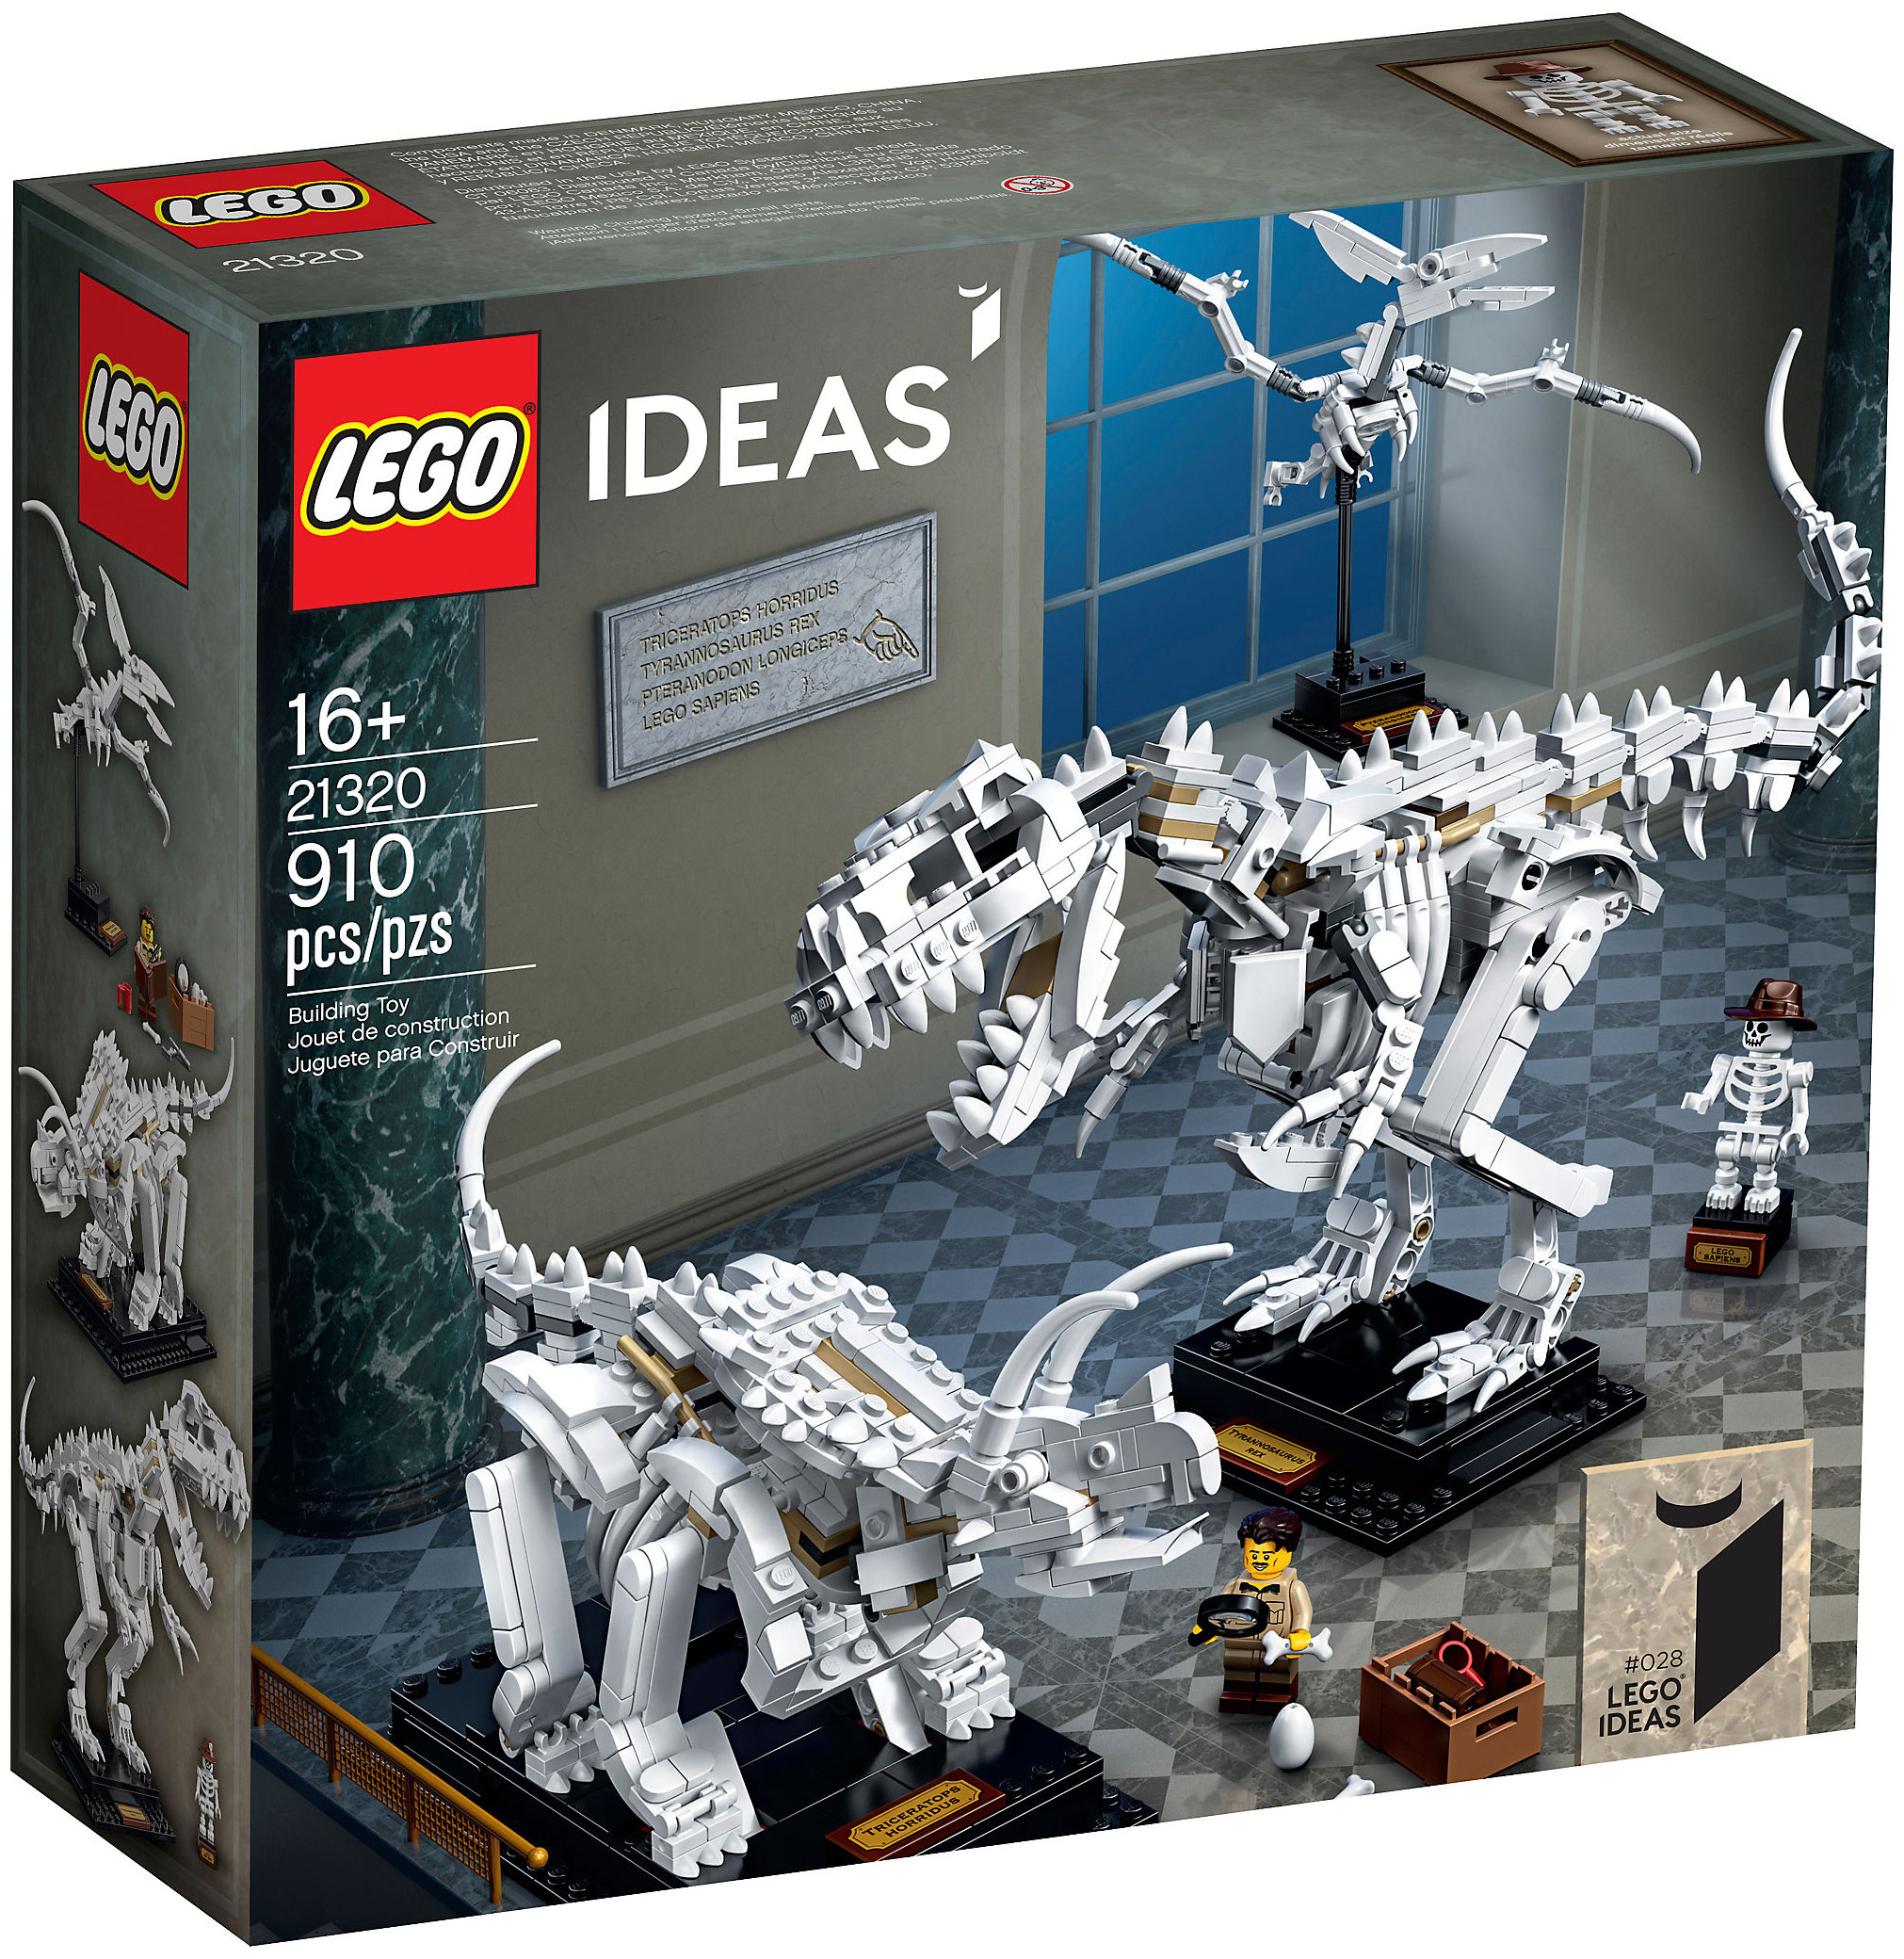 LEGO Ideas 21320 pas cher, Les fossiles de dinosaures